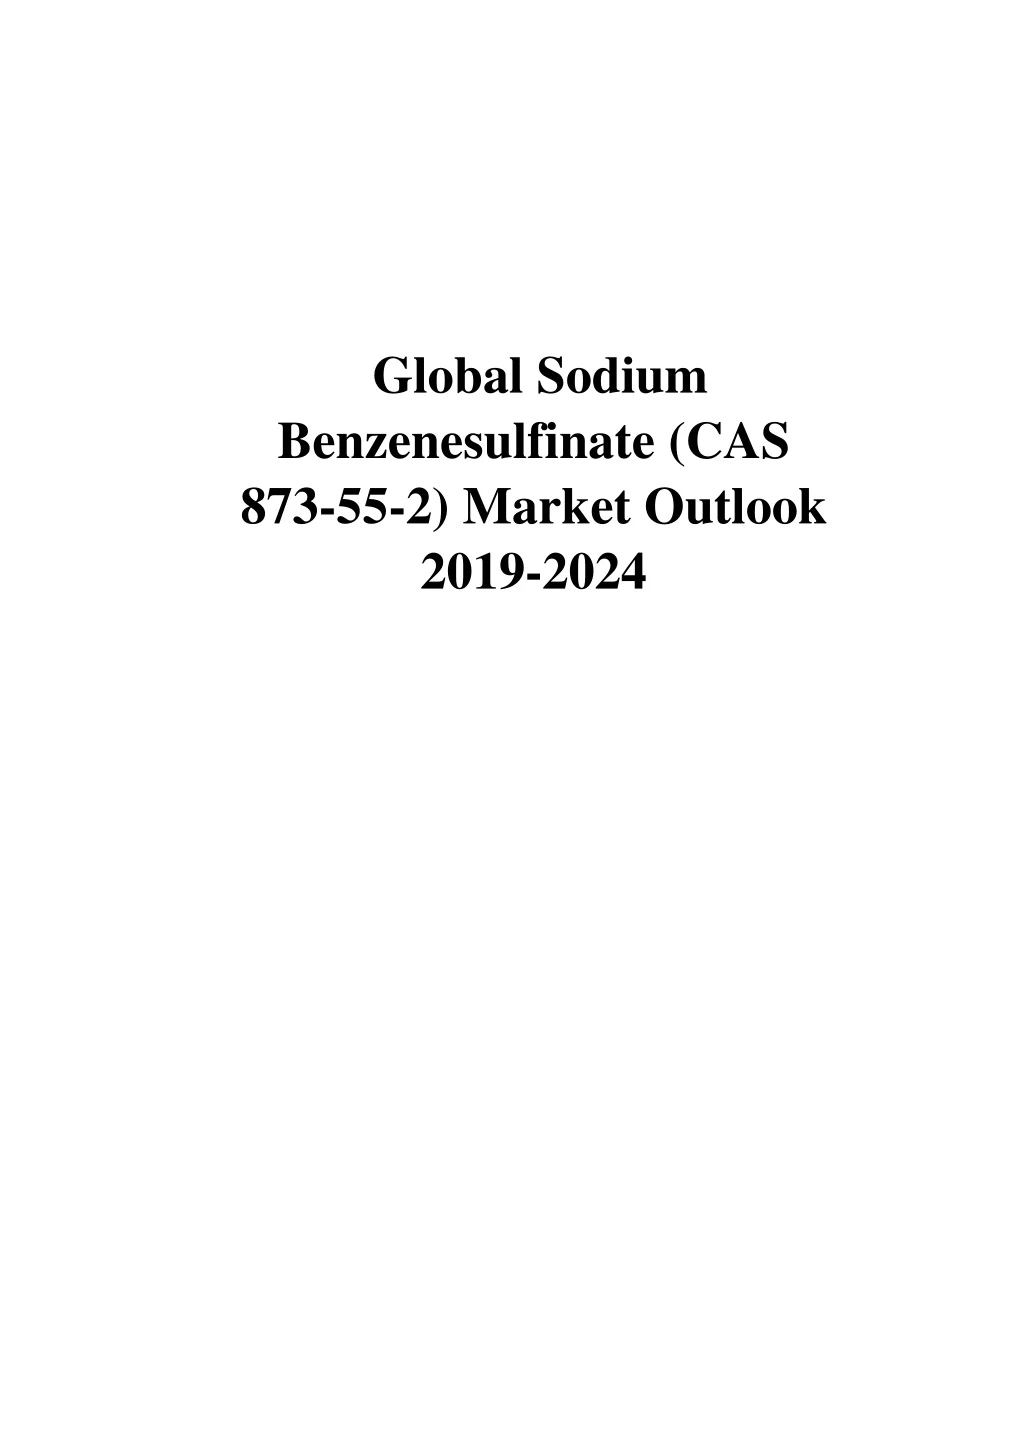 global sodium benzenesulfinate